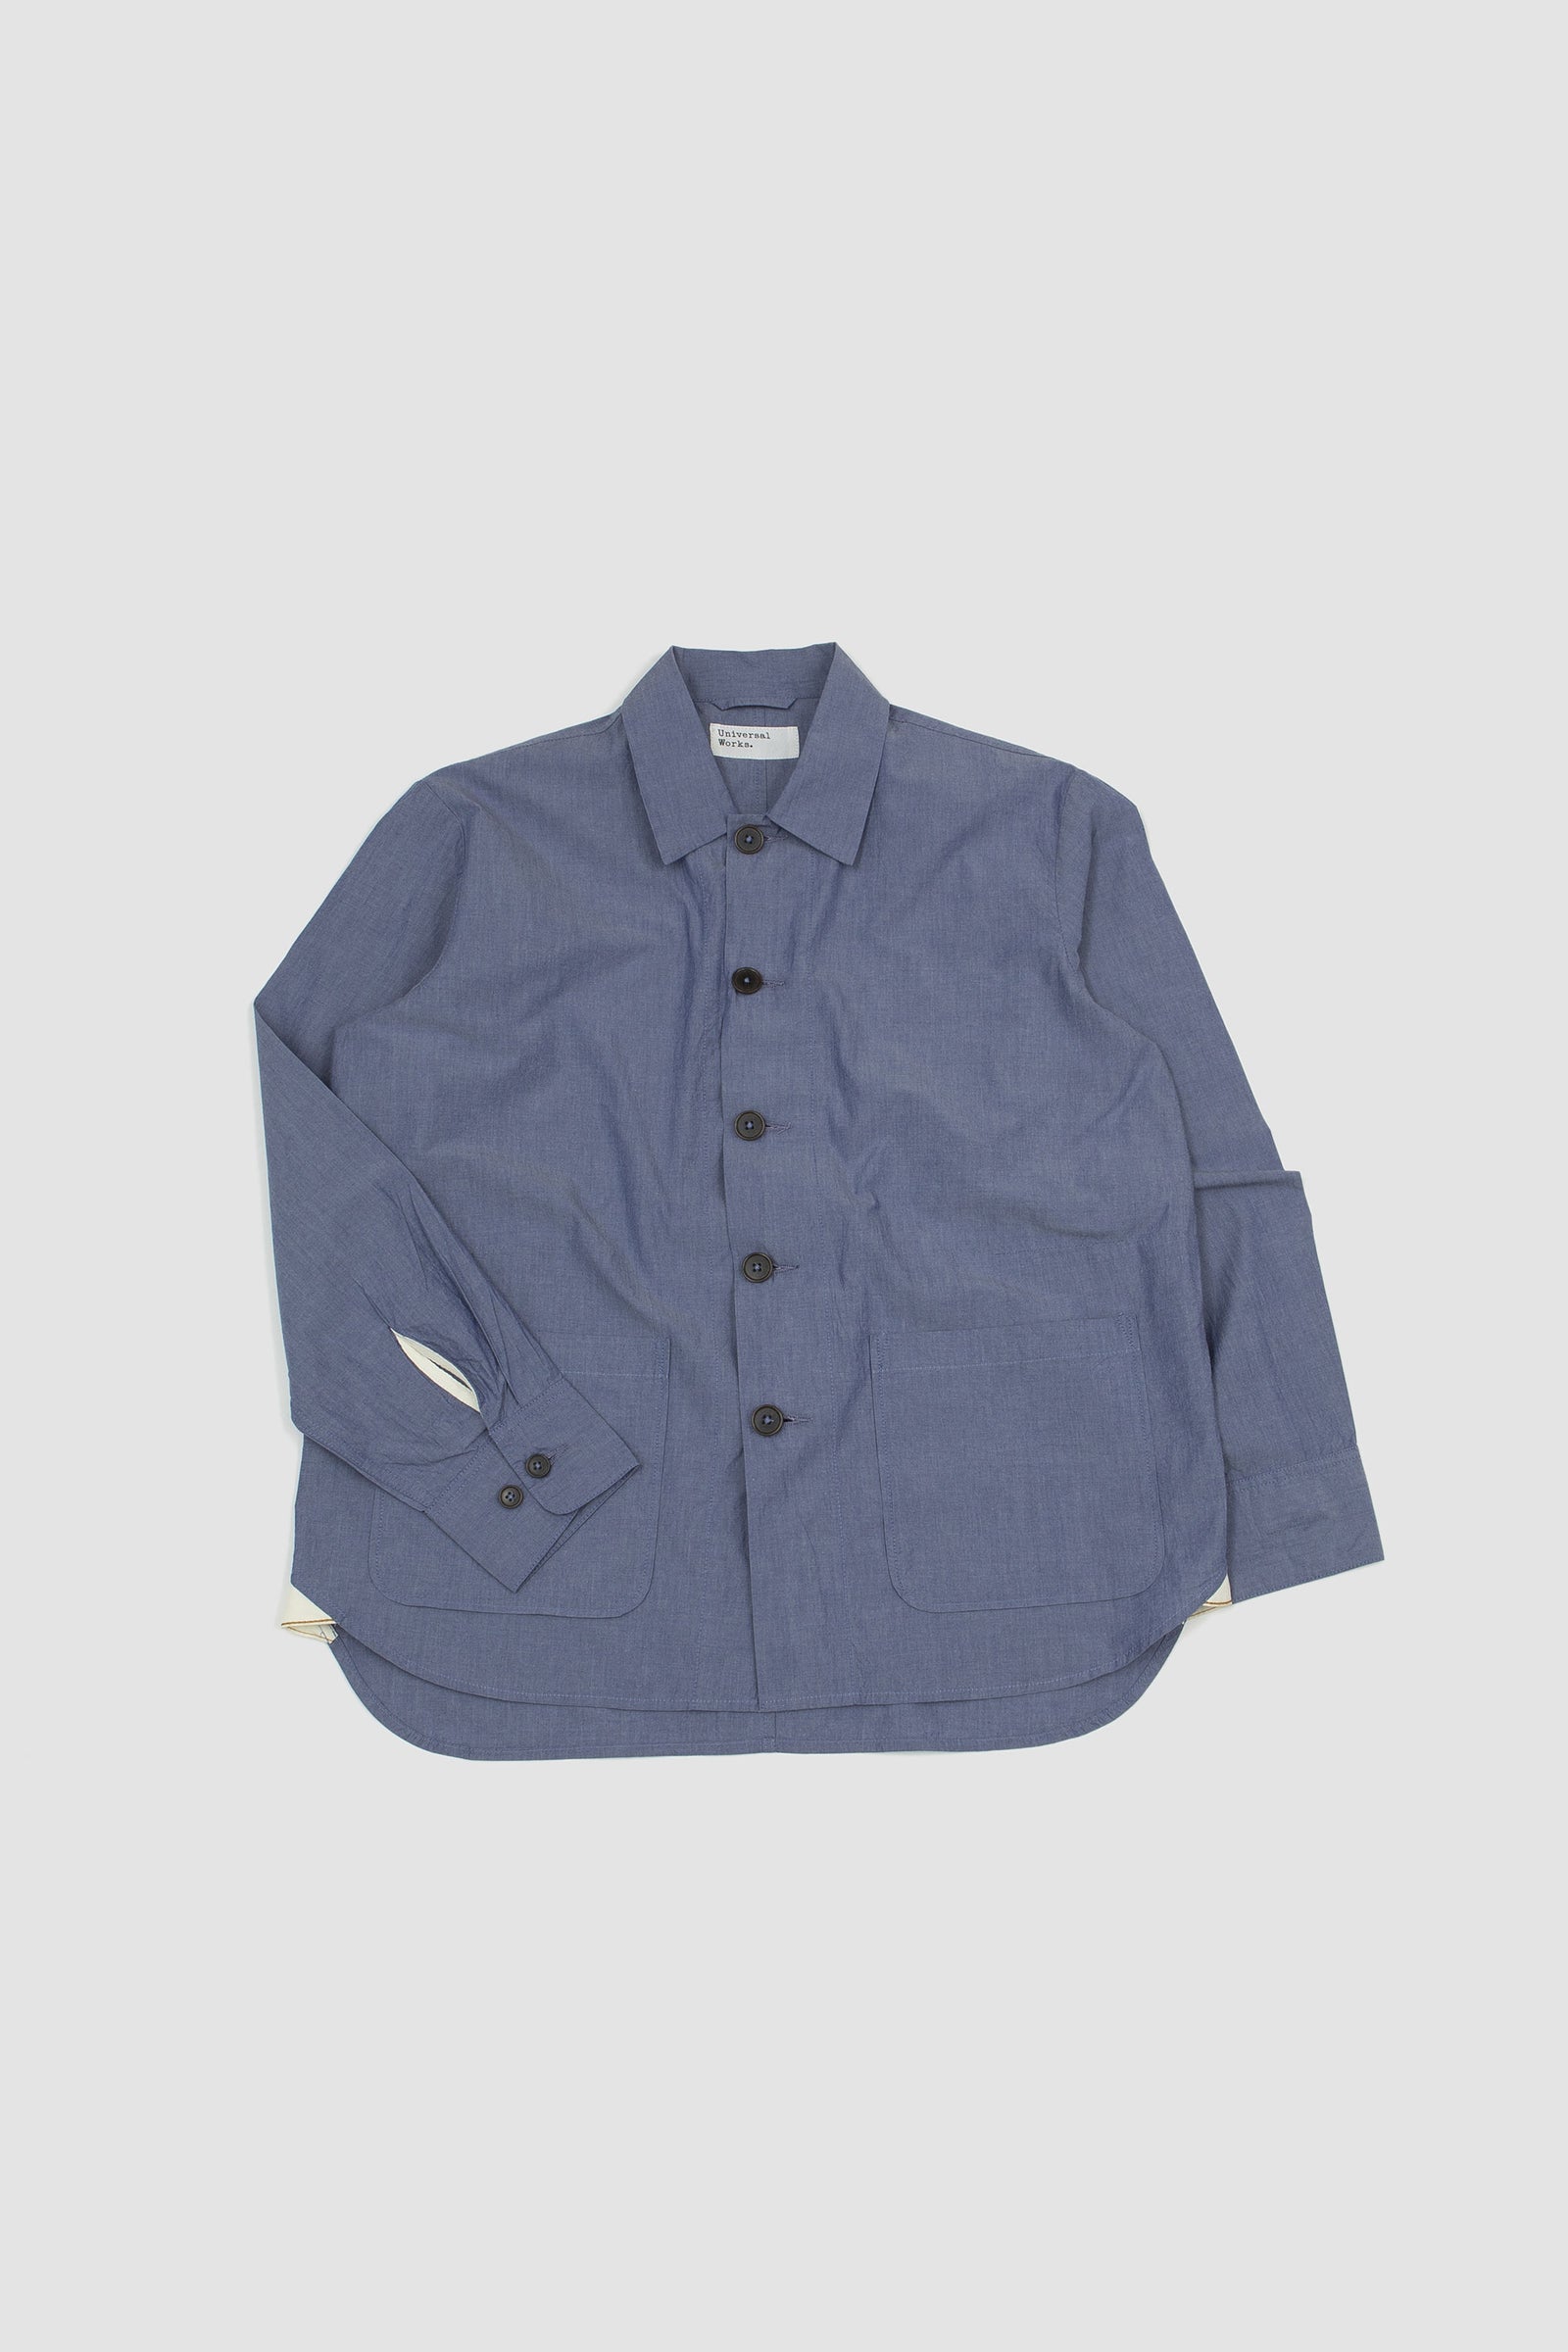 SPORTIVO [Travail shirt typewriter chambray blue]